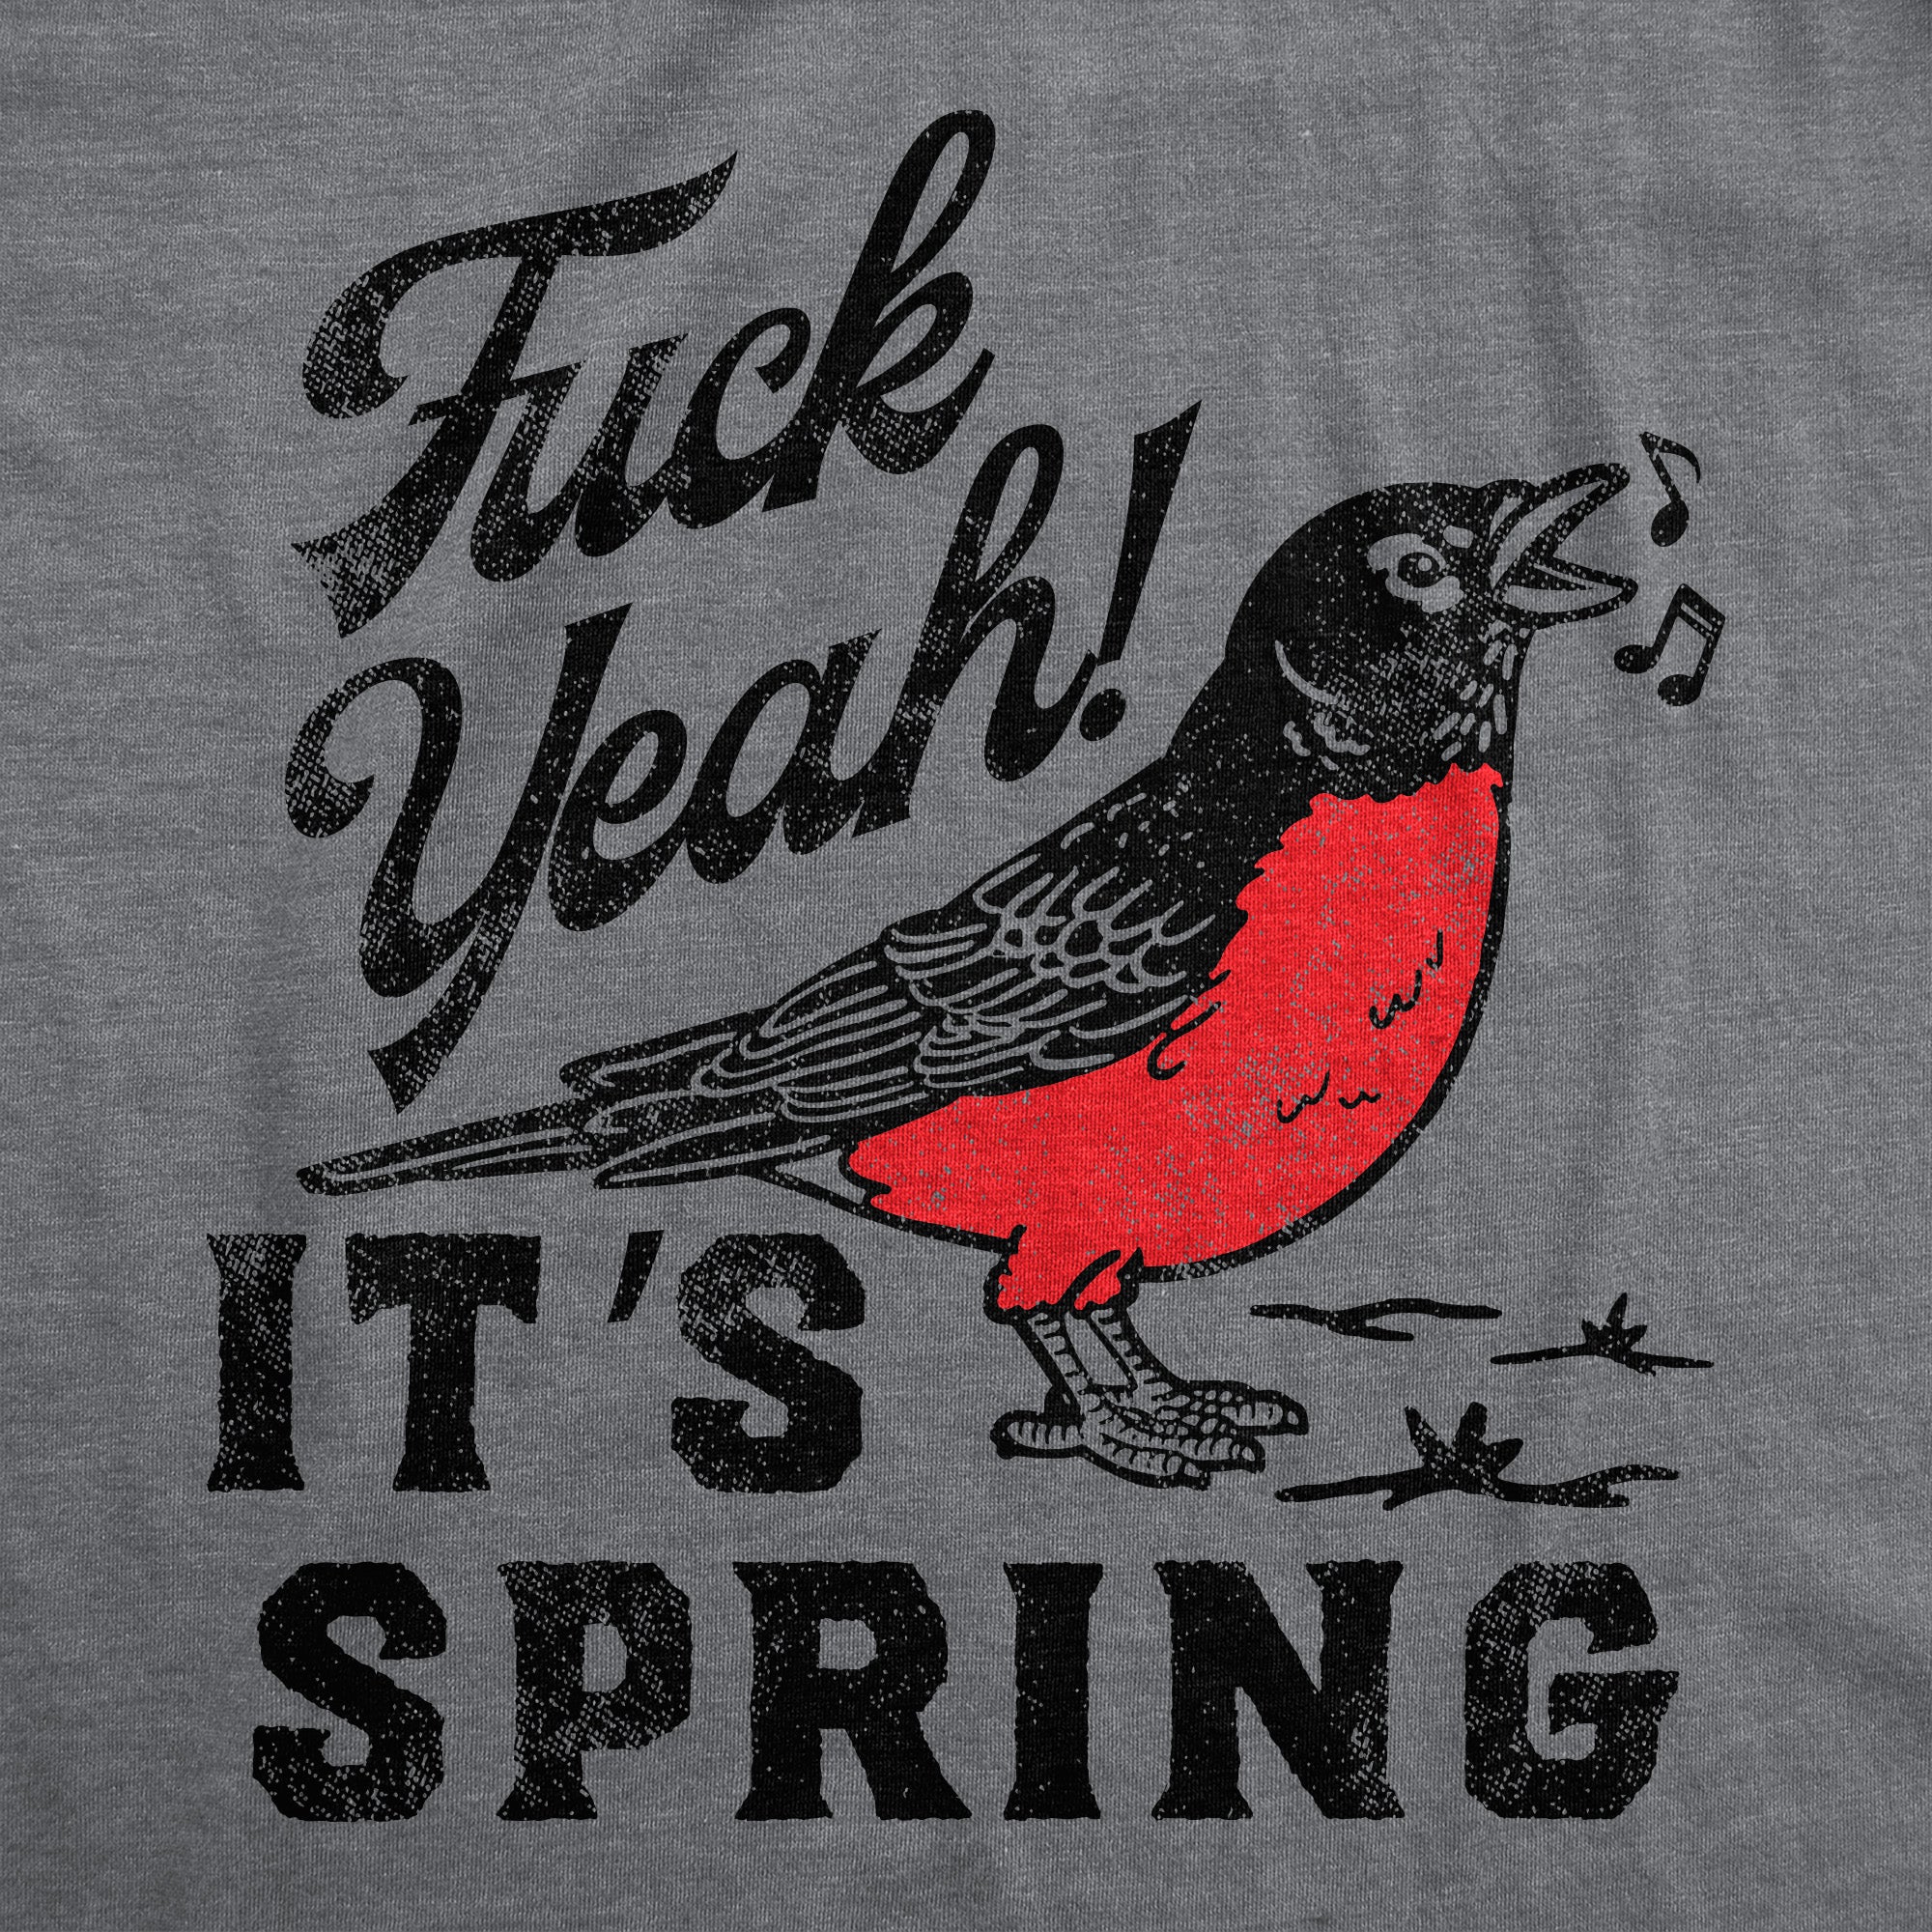 Funny Dark Heather Grey - Fuck Yeah Its Spring Fuck Yeah Its Spring Womens T Shirt Nerdy sarcastic Tee